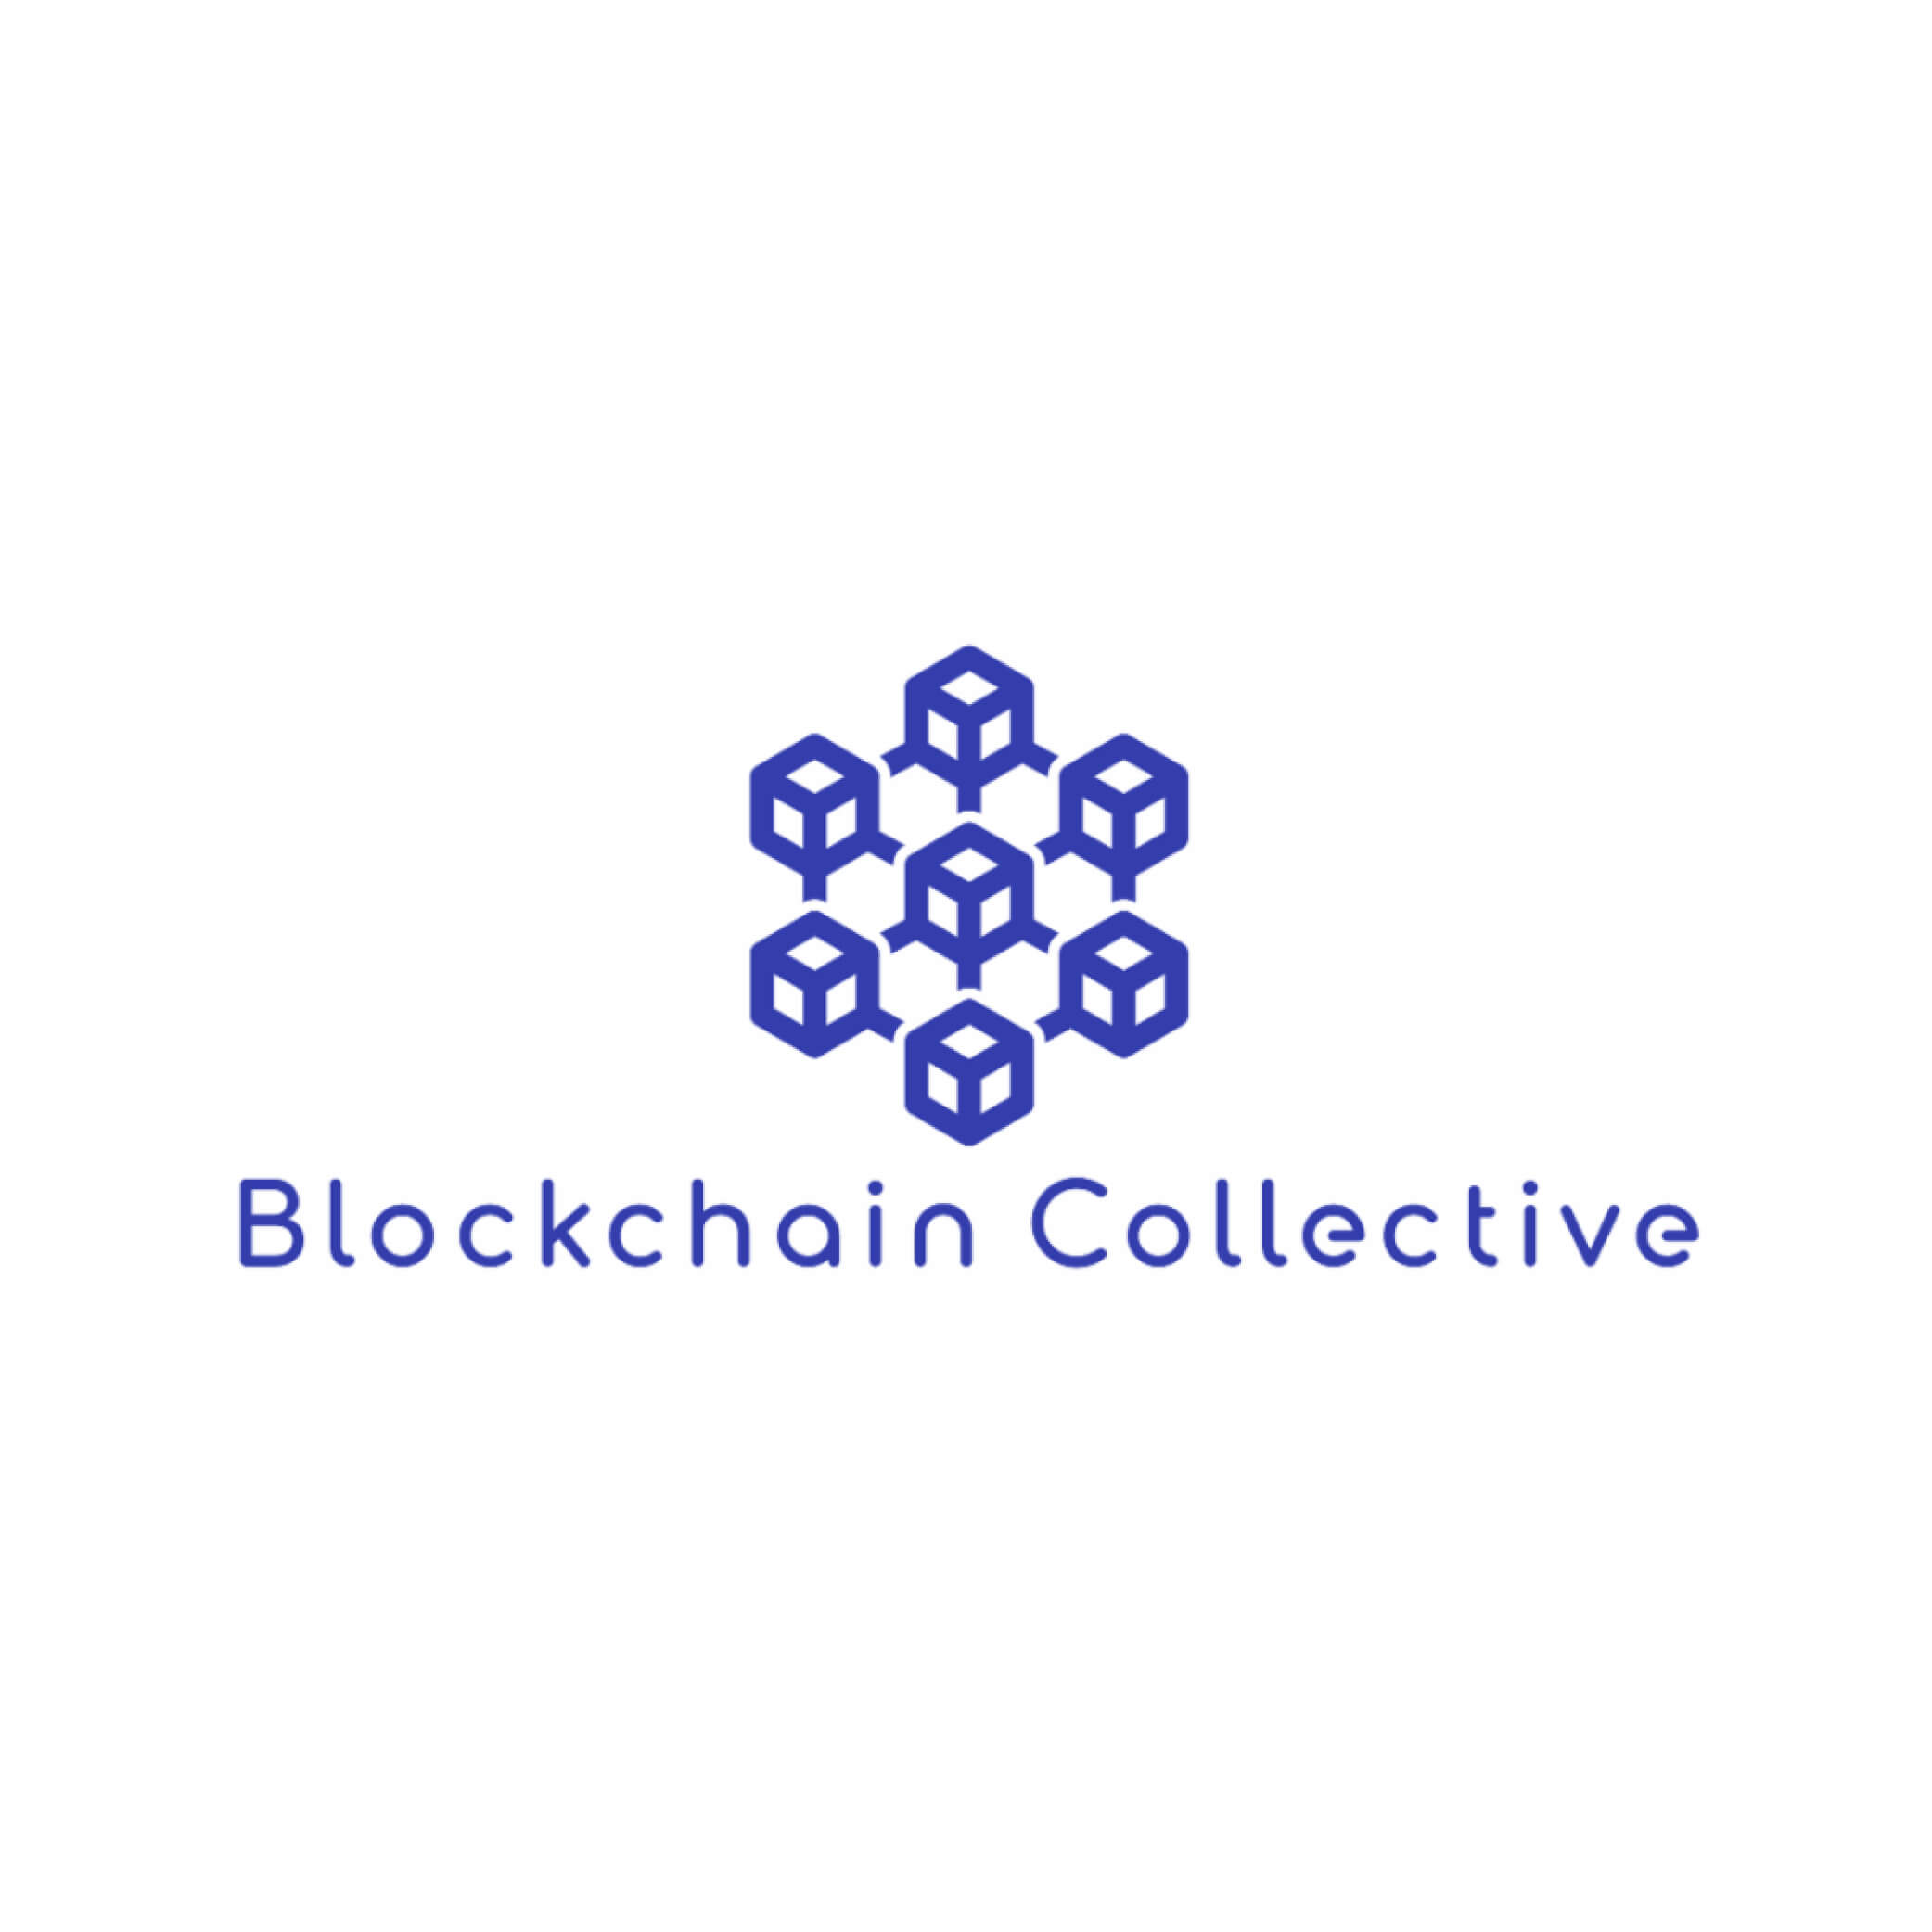 The Blockchain Collective